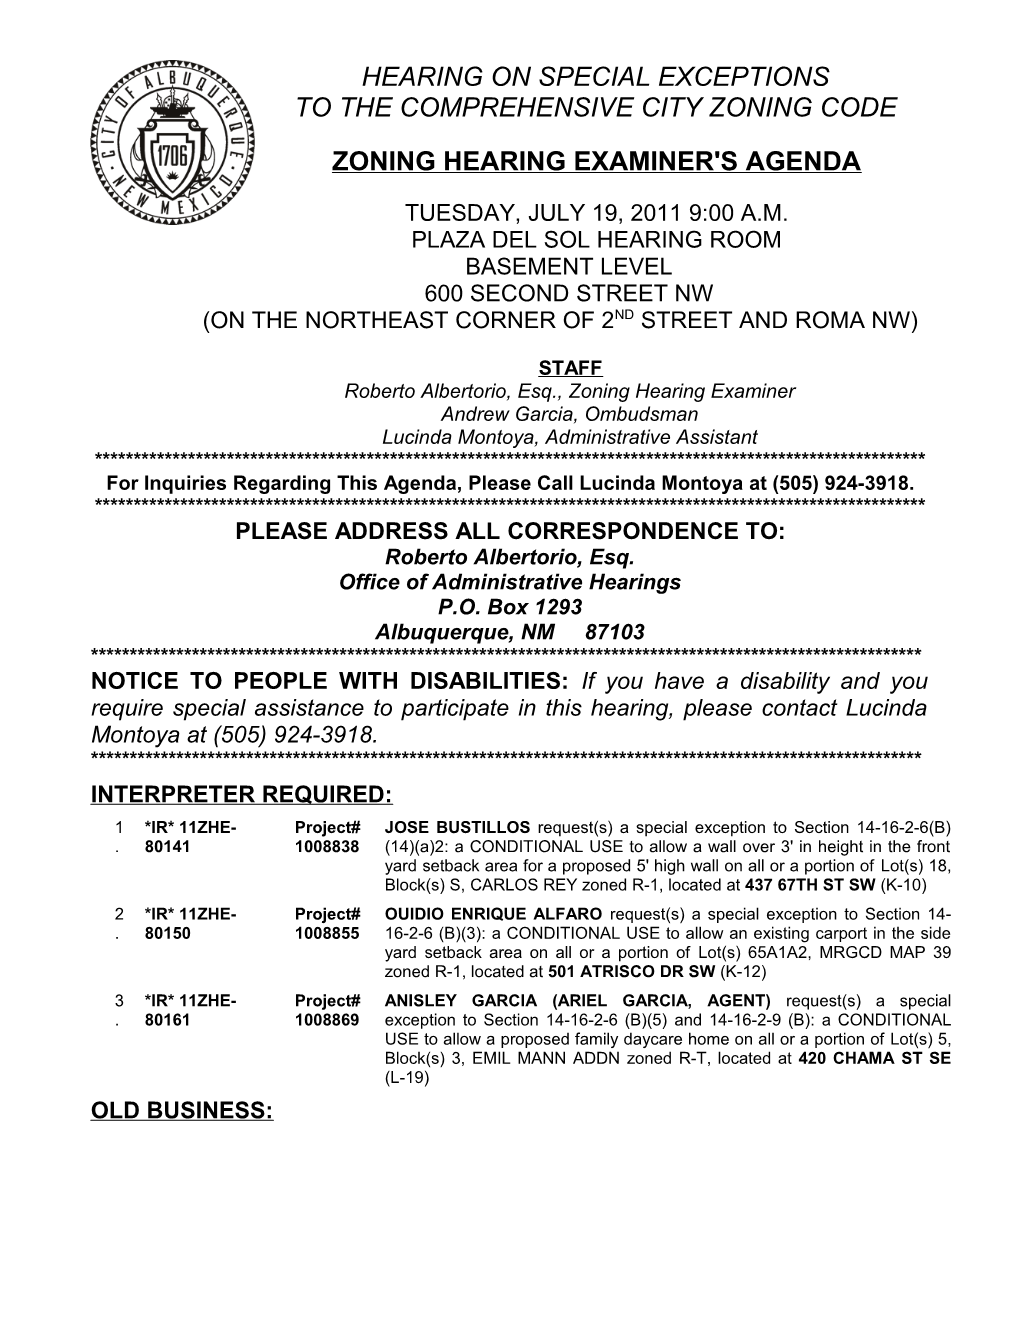 Zoning Hearing Examiner's Agenda s1